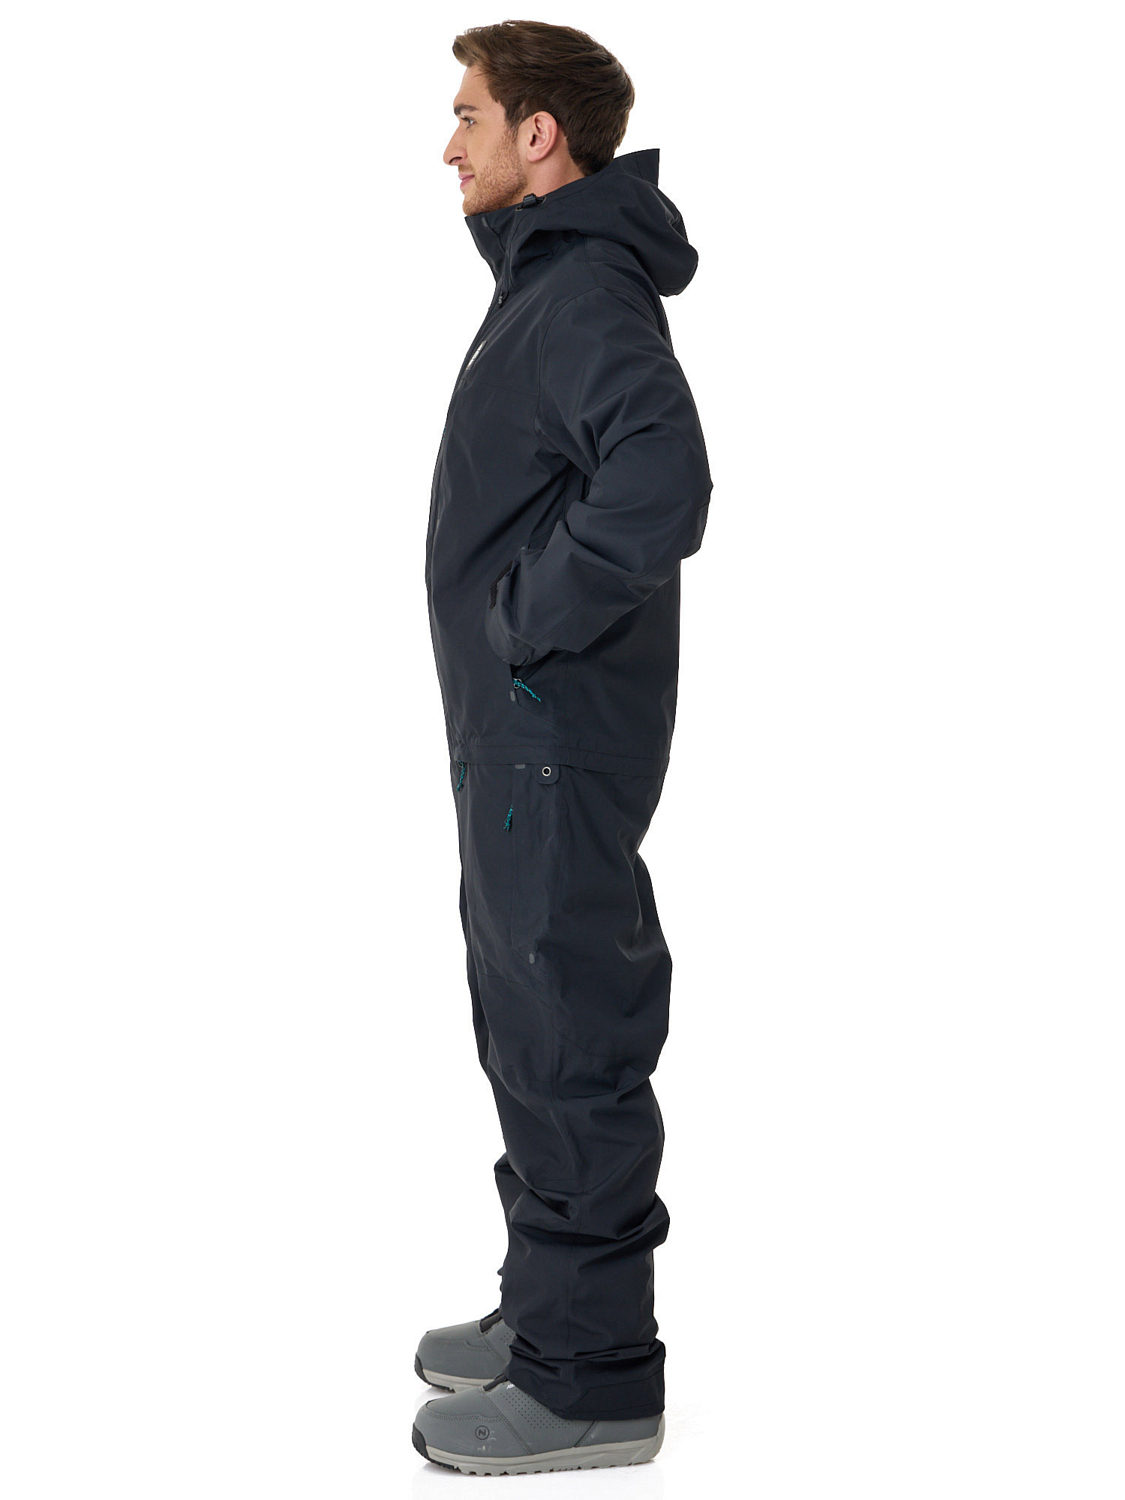 Комбинезон сноубордический AIRBLASTER Beast Suit Black